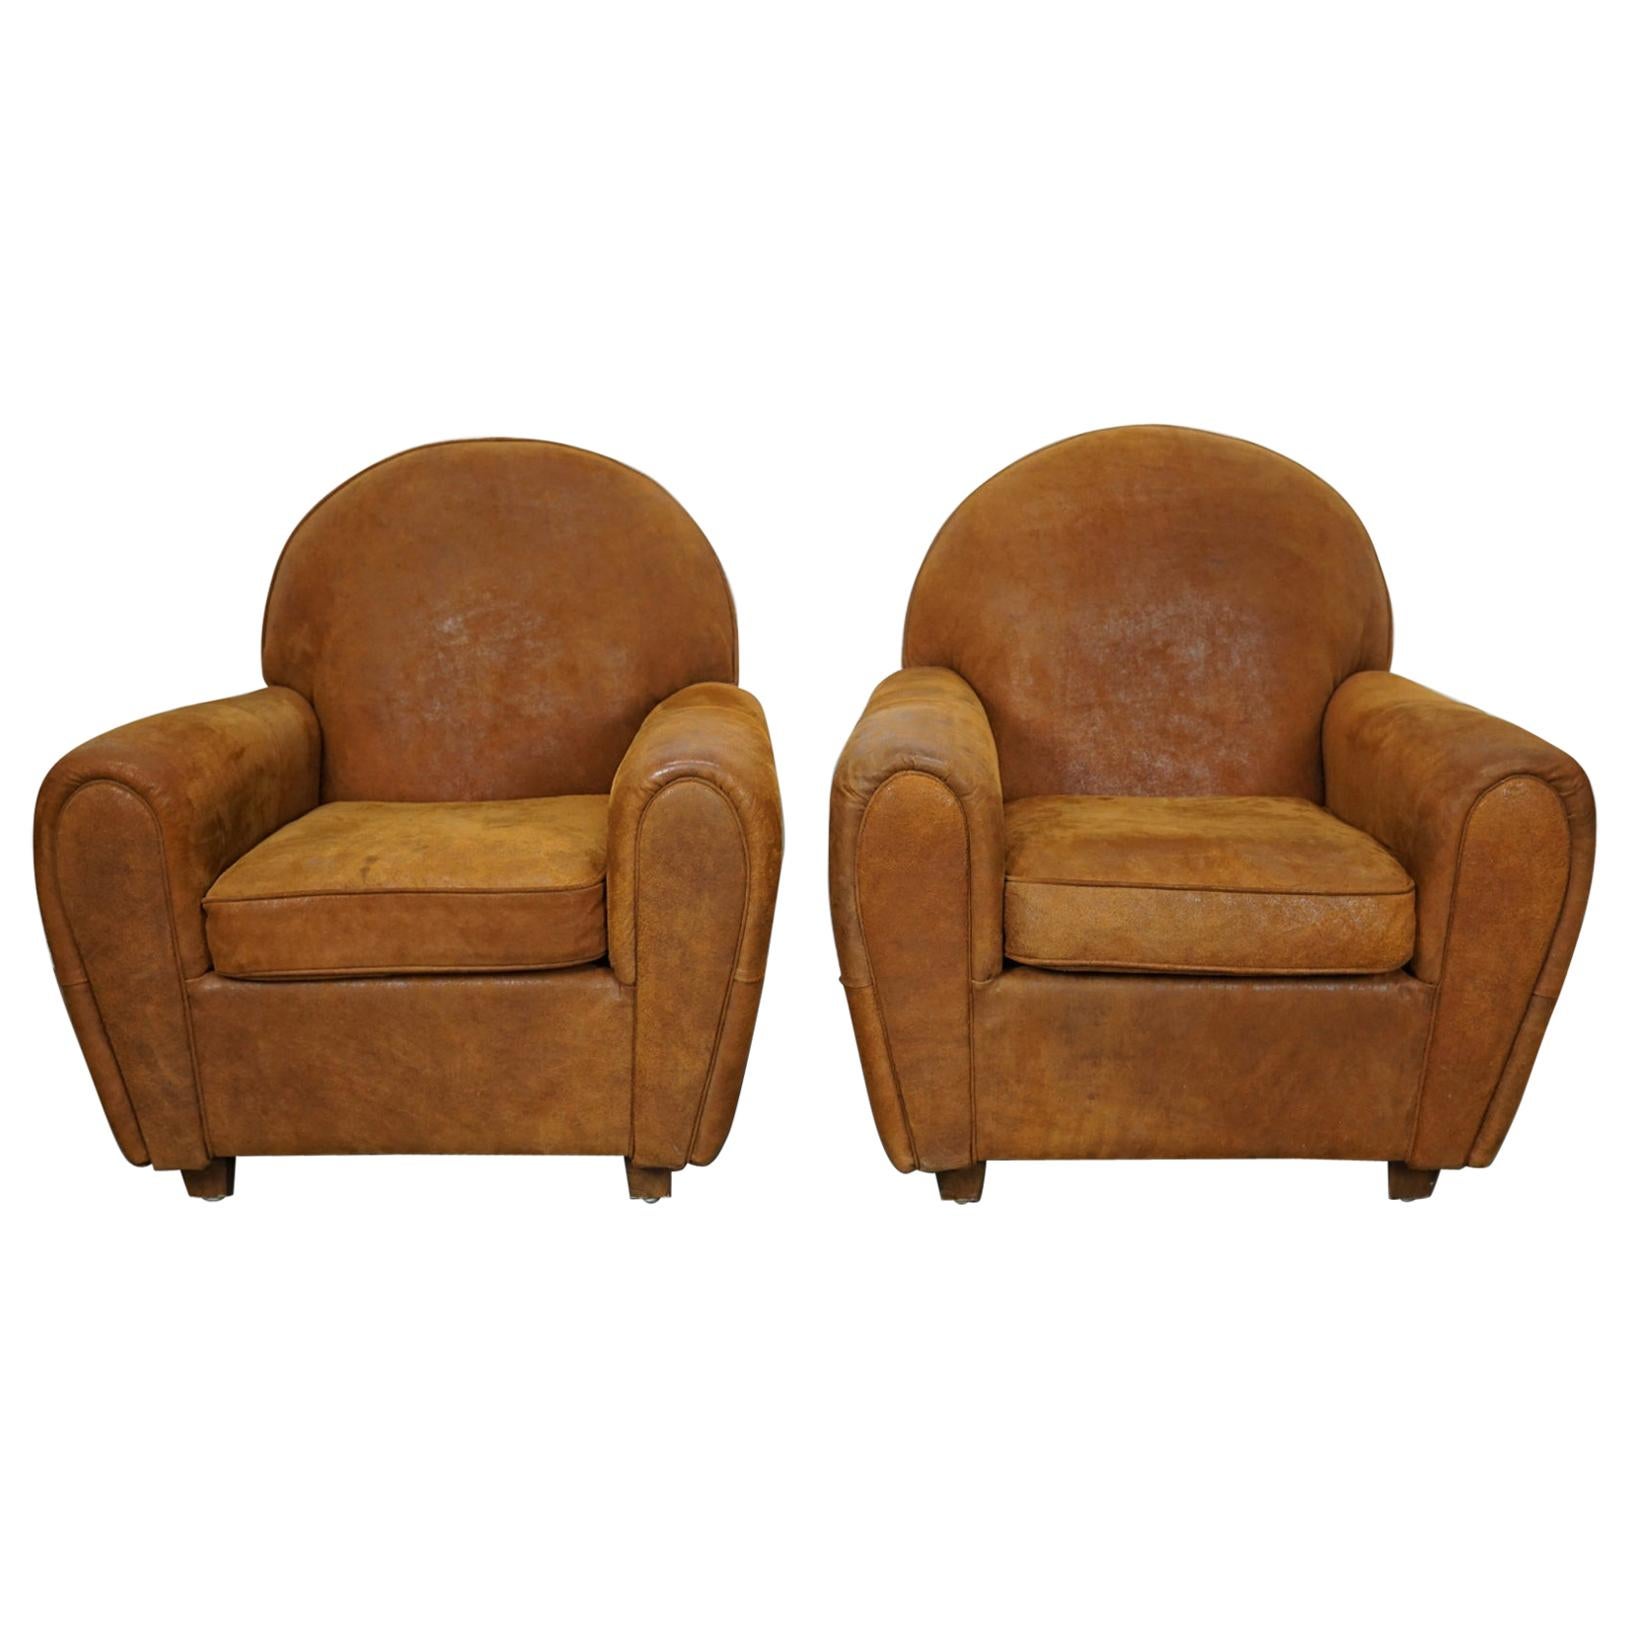 Vintage Dutch Cognac Colored Leather Club Chairs, Set of 2